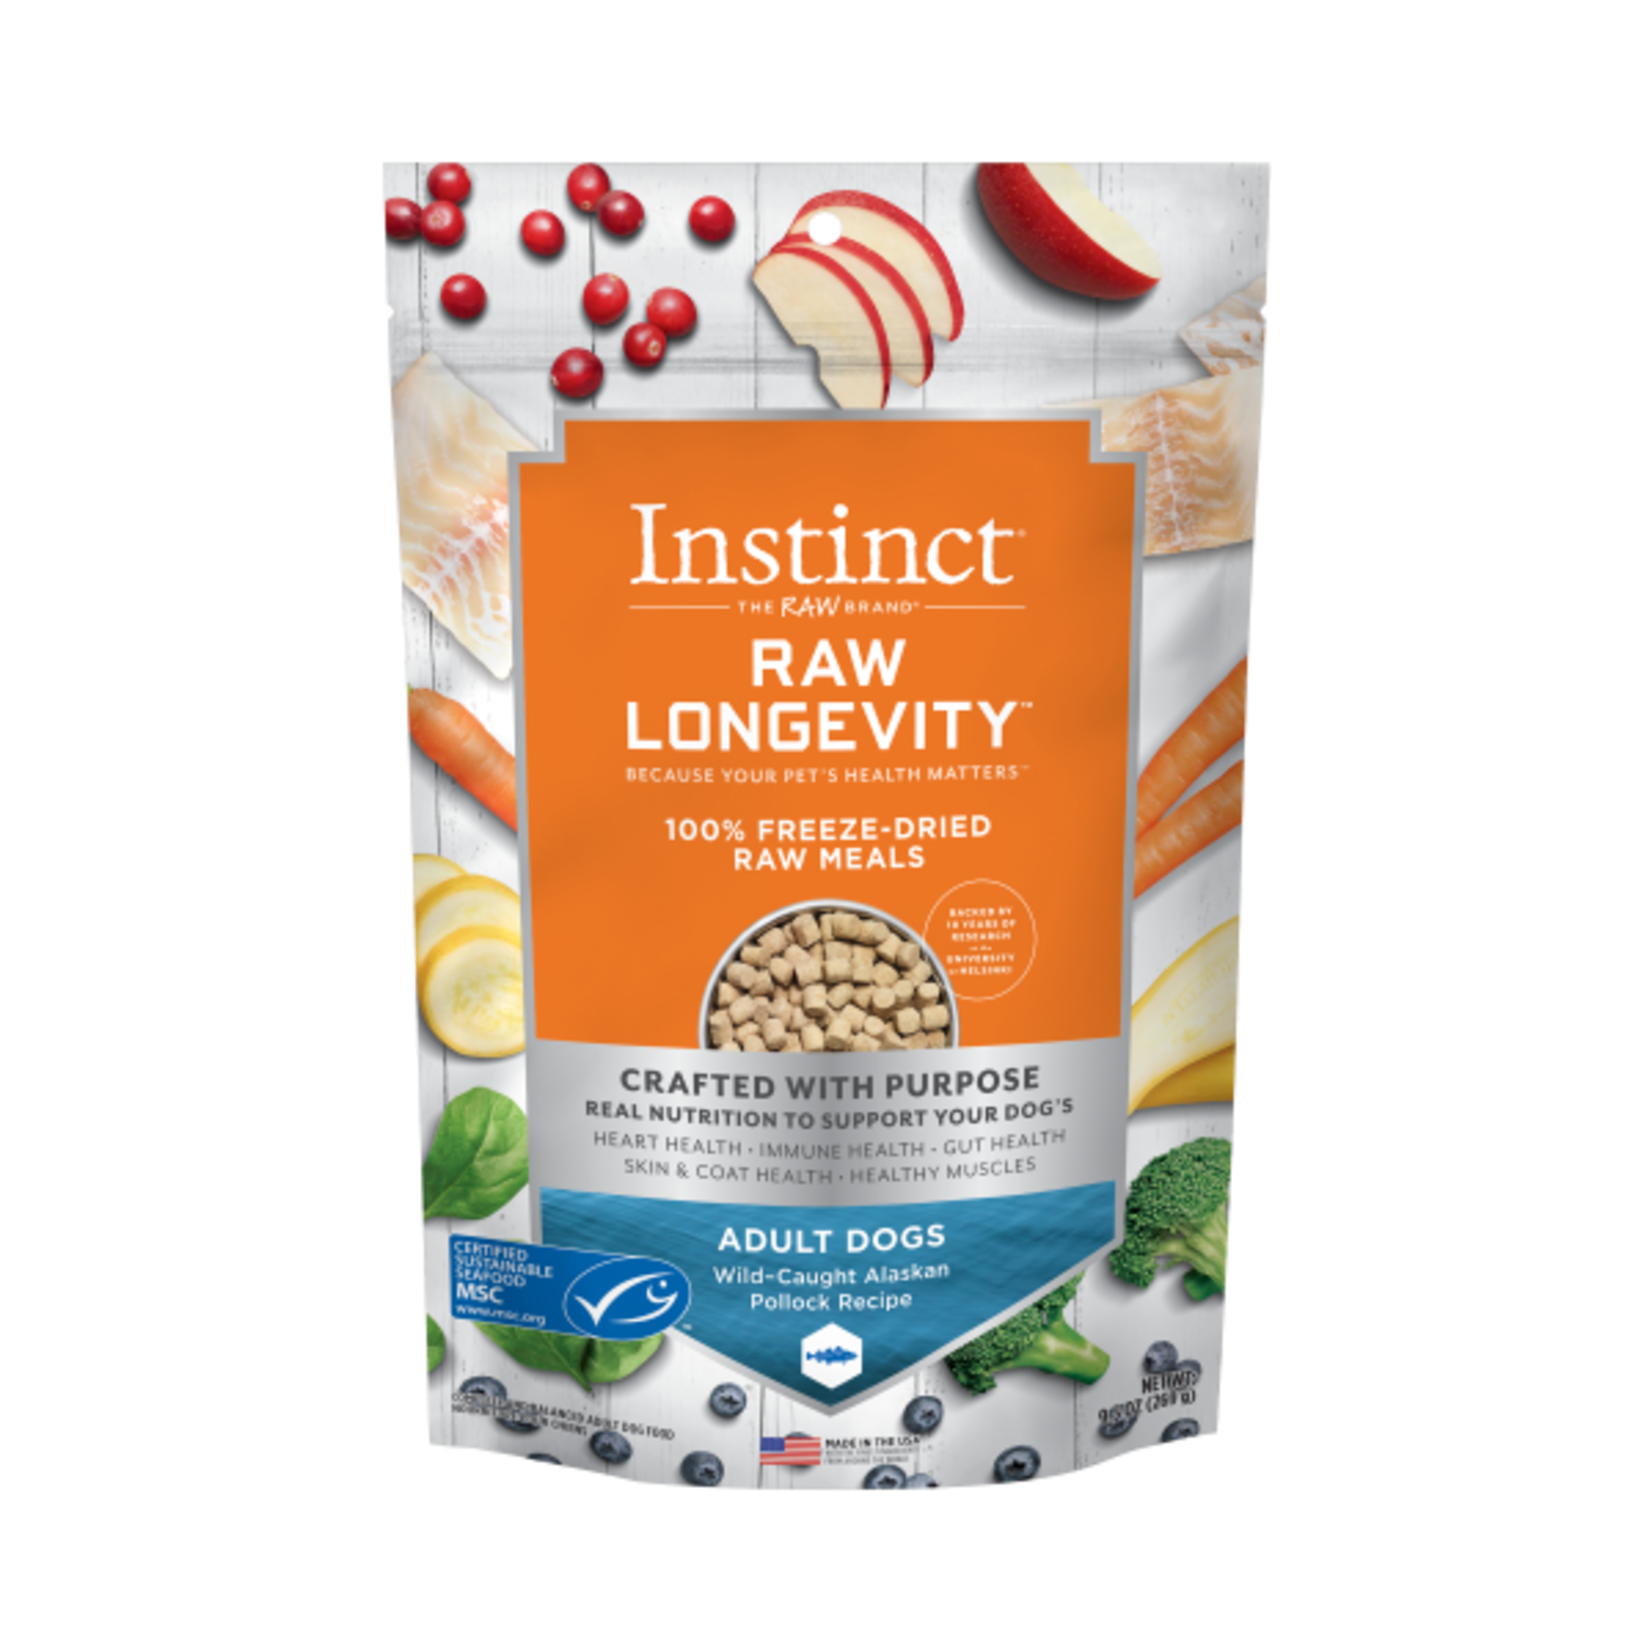 Instinct Instinct Dog Raw Longevity FD Meals Adult Pollock 9.5 oz